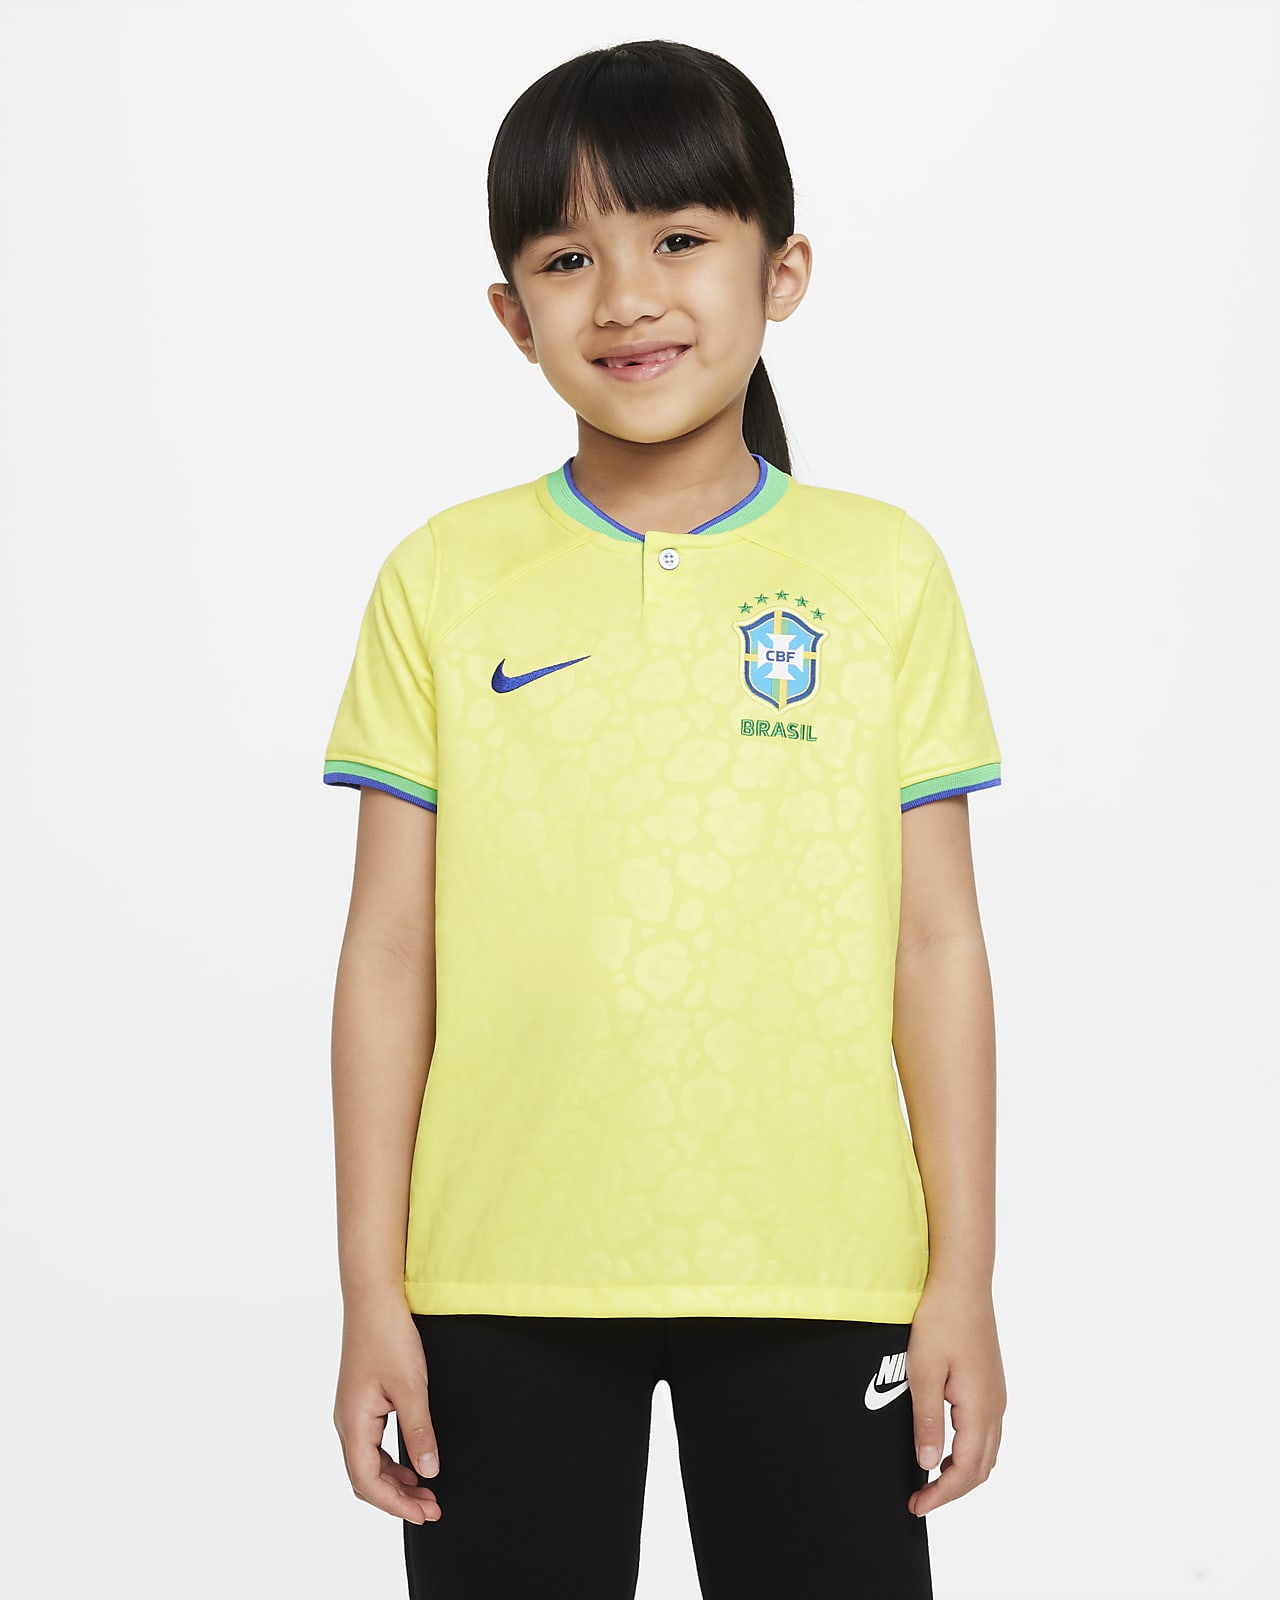 2022/23 Home Younger Kids' Nike Dri-FIT Football Shirt. Nike ID